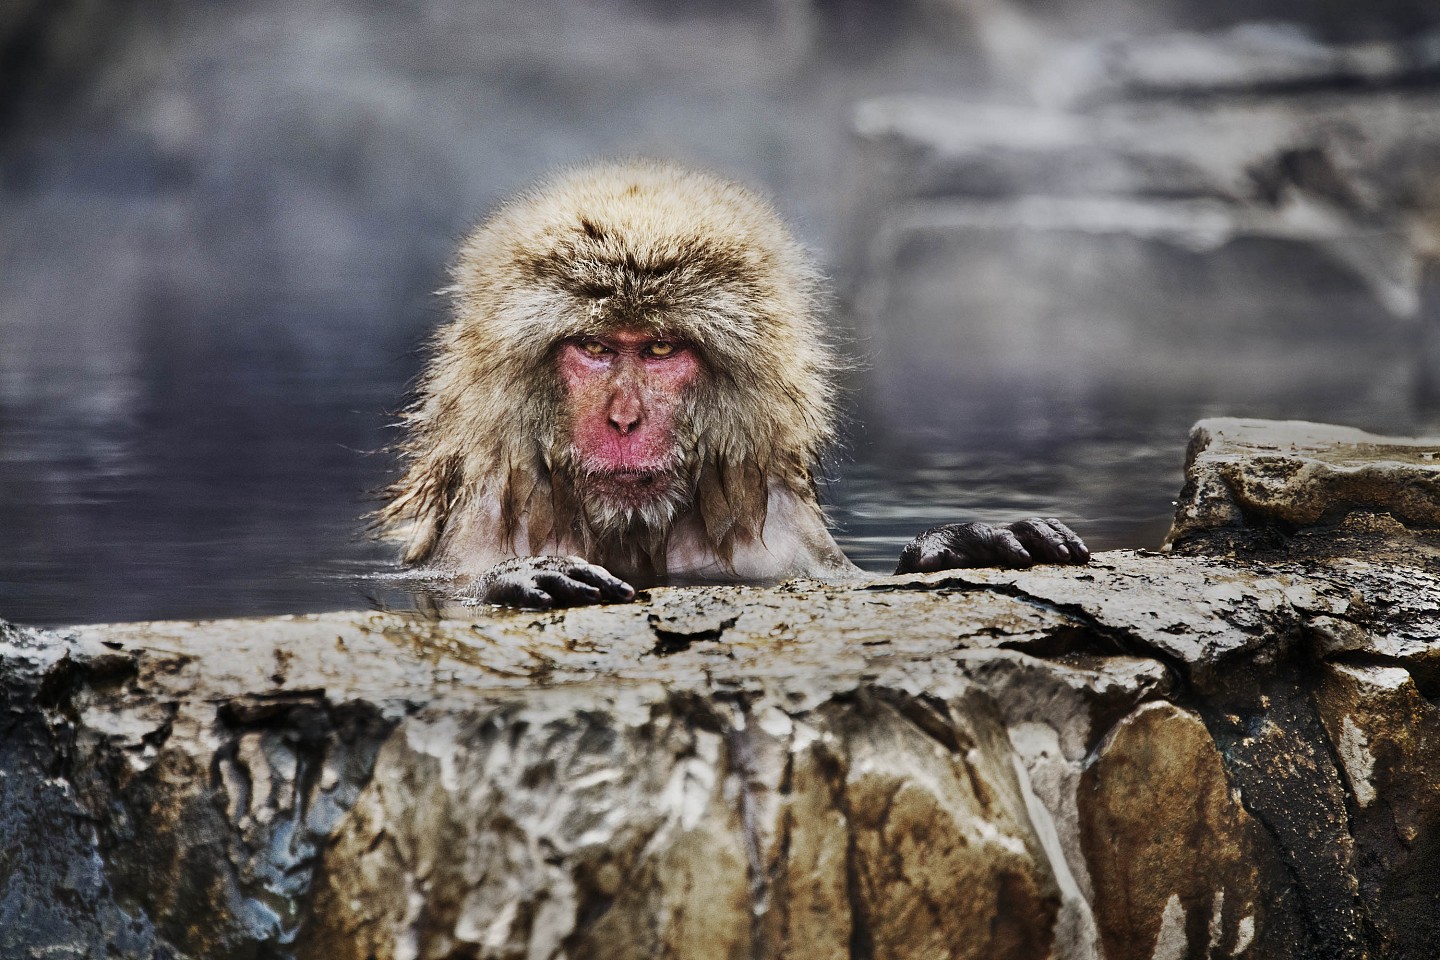 Steve McCurry, Snow monkey in Jigokudani Yaen-koen park, Japan, 2018
FujiFlex Crystal Archive Print, 30 x 40 in. (76.2 x 101.6 cm)
10315